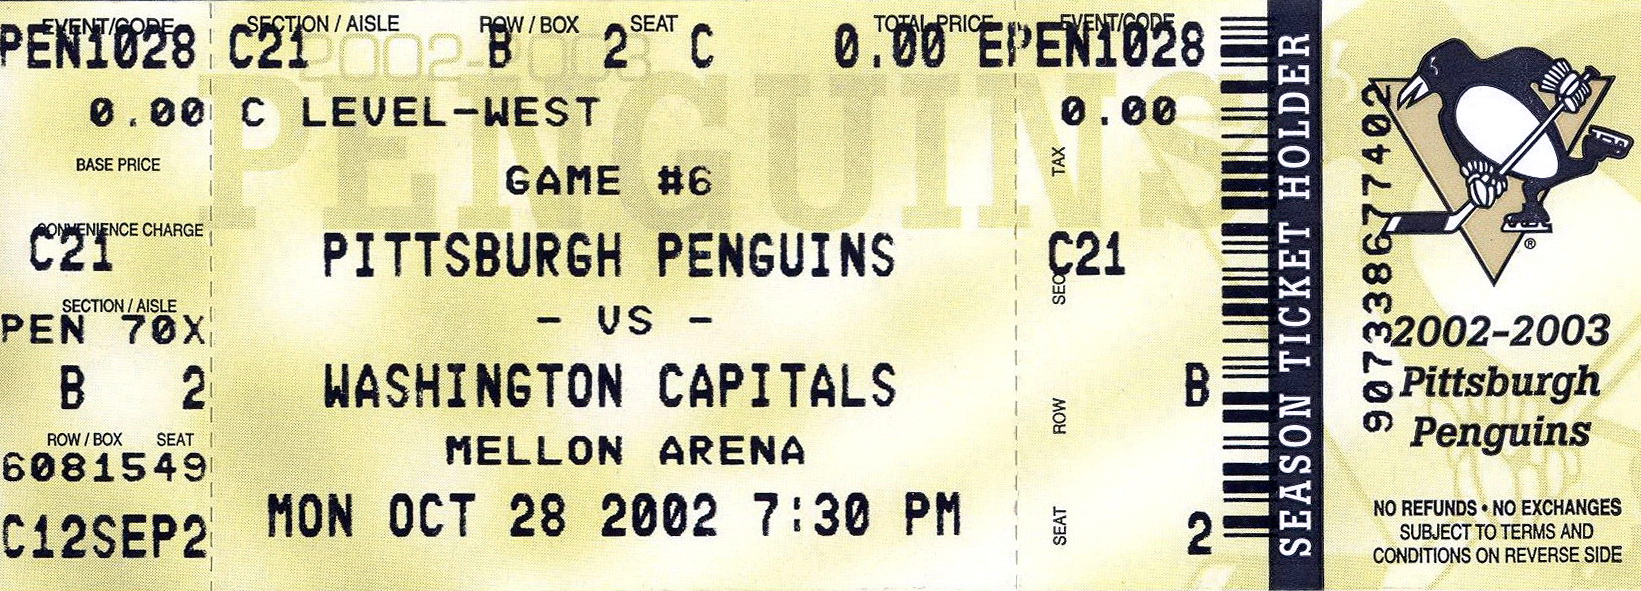 Penguins Ticket 